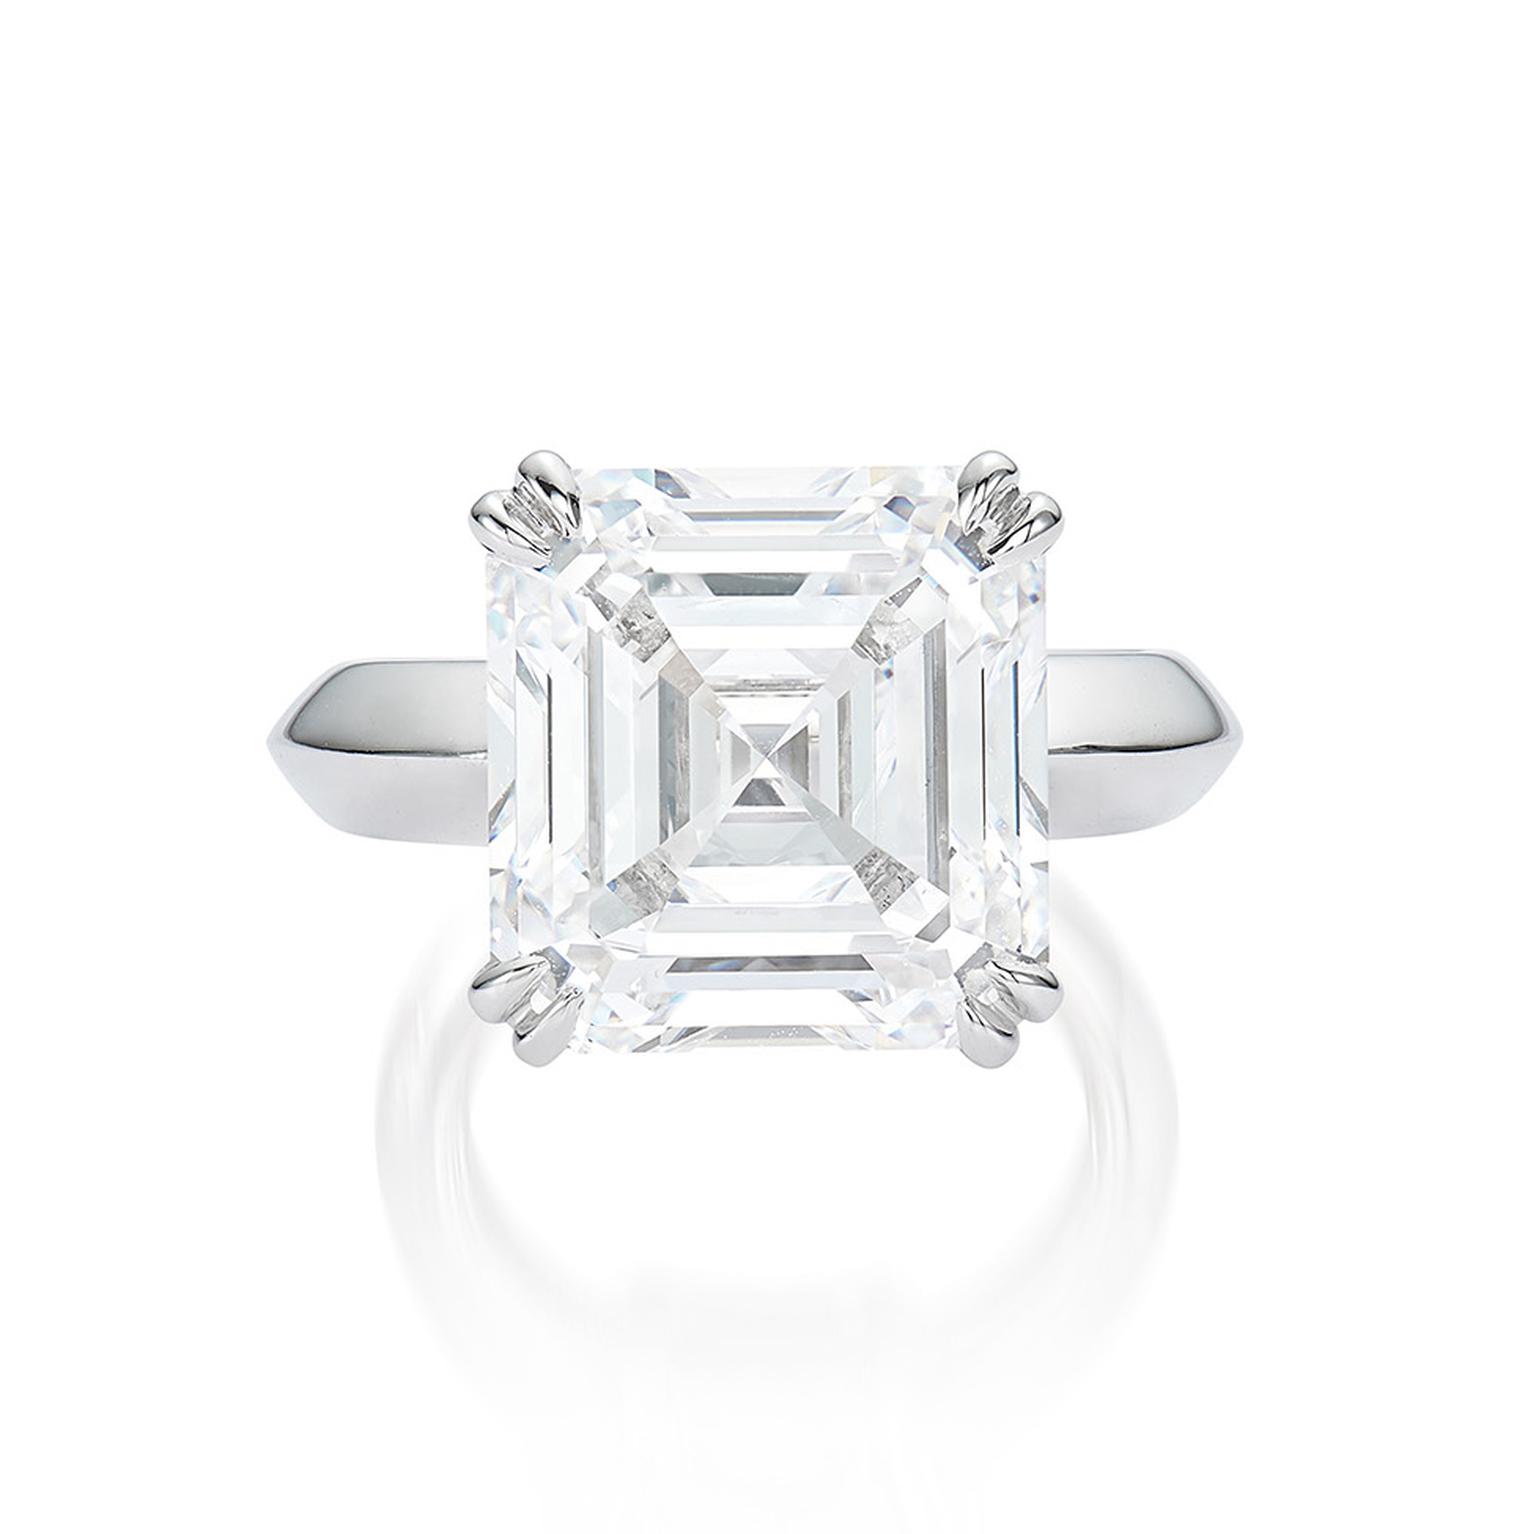 Lot 665 - Emerald-cut D-Flawless diamond ring - Phillips Auction 5 June 2021